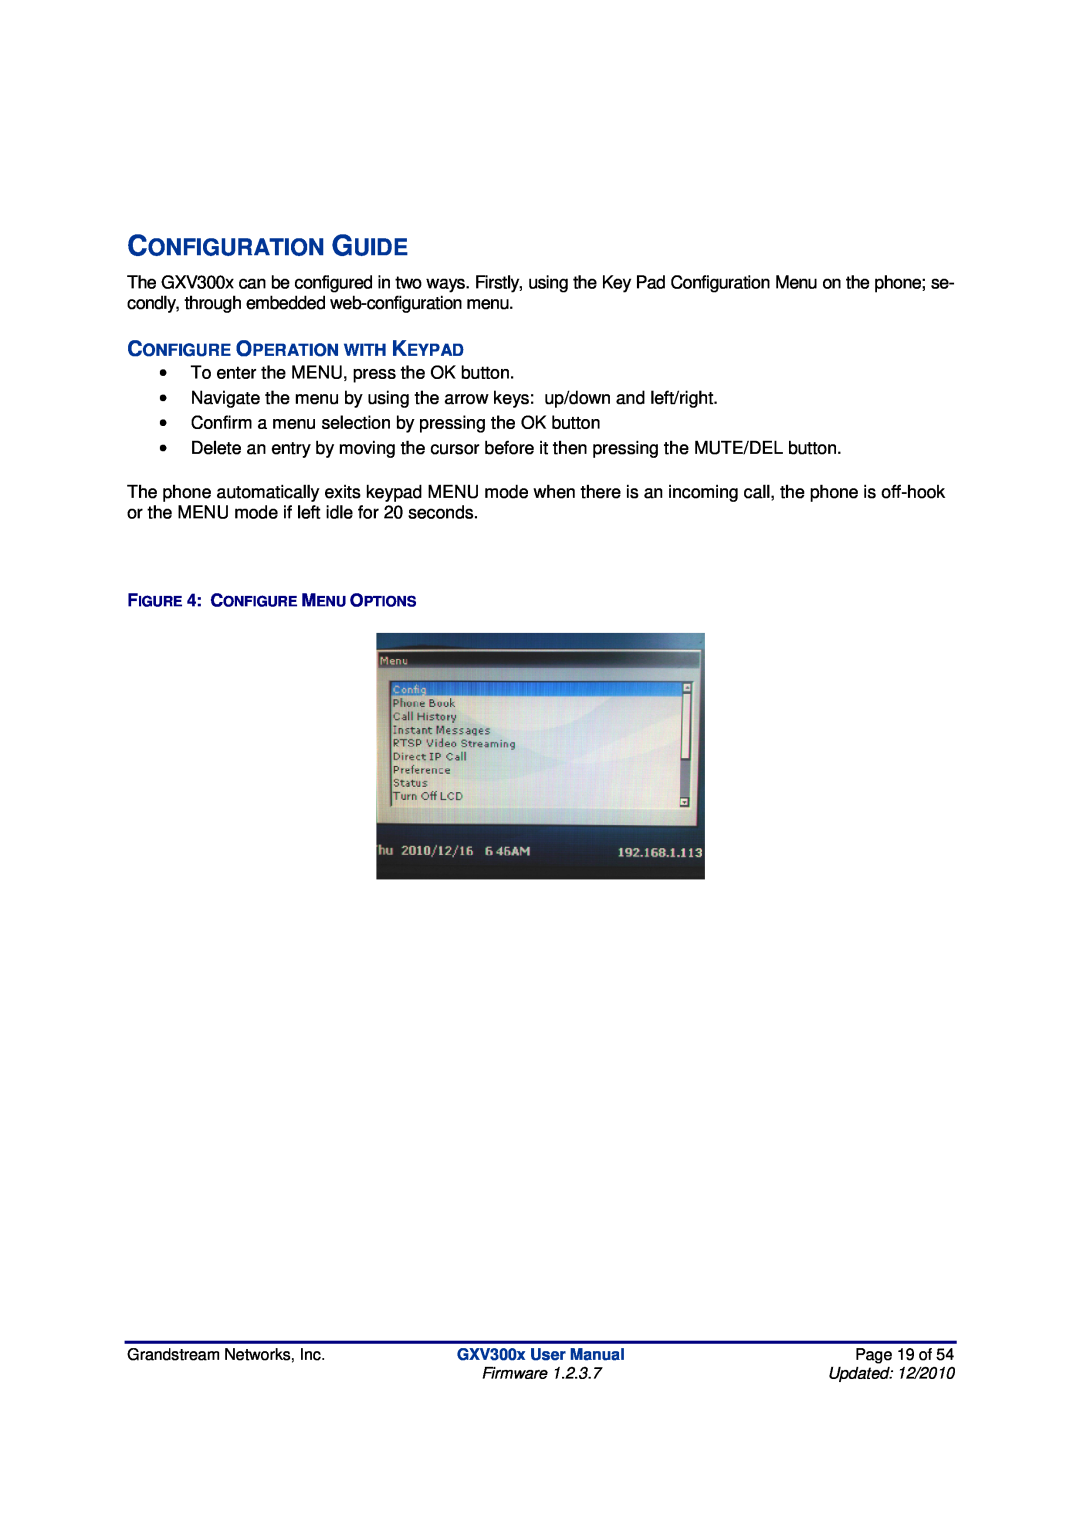 Grandstream Networks GXV300X manual Configuration Guide 